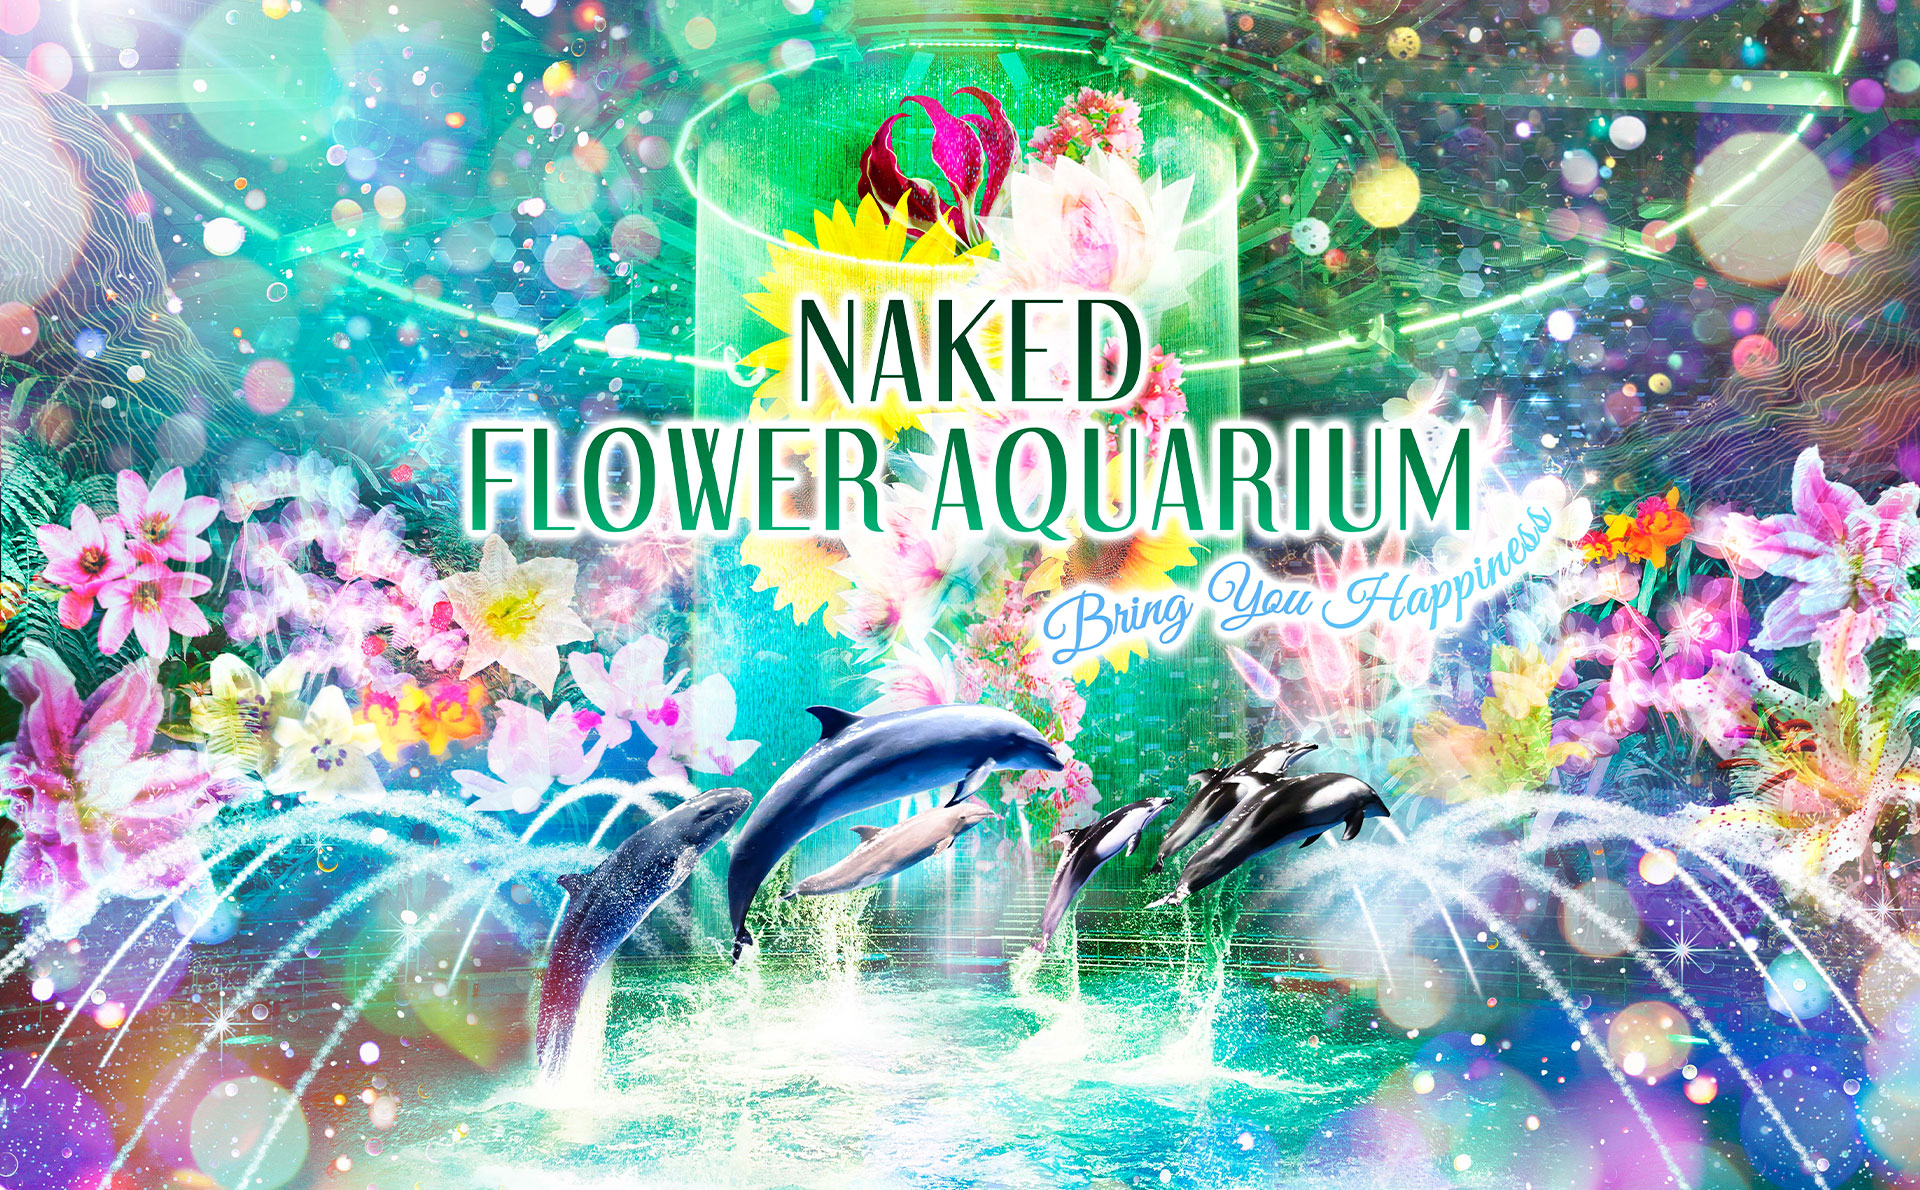 Naked Flower Aquarium